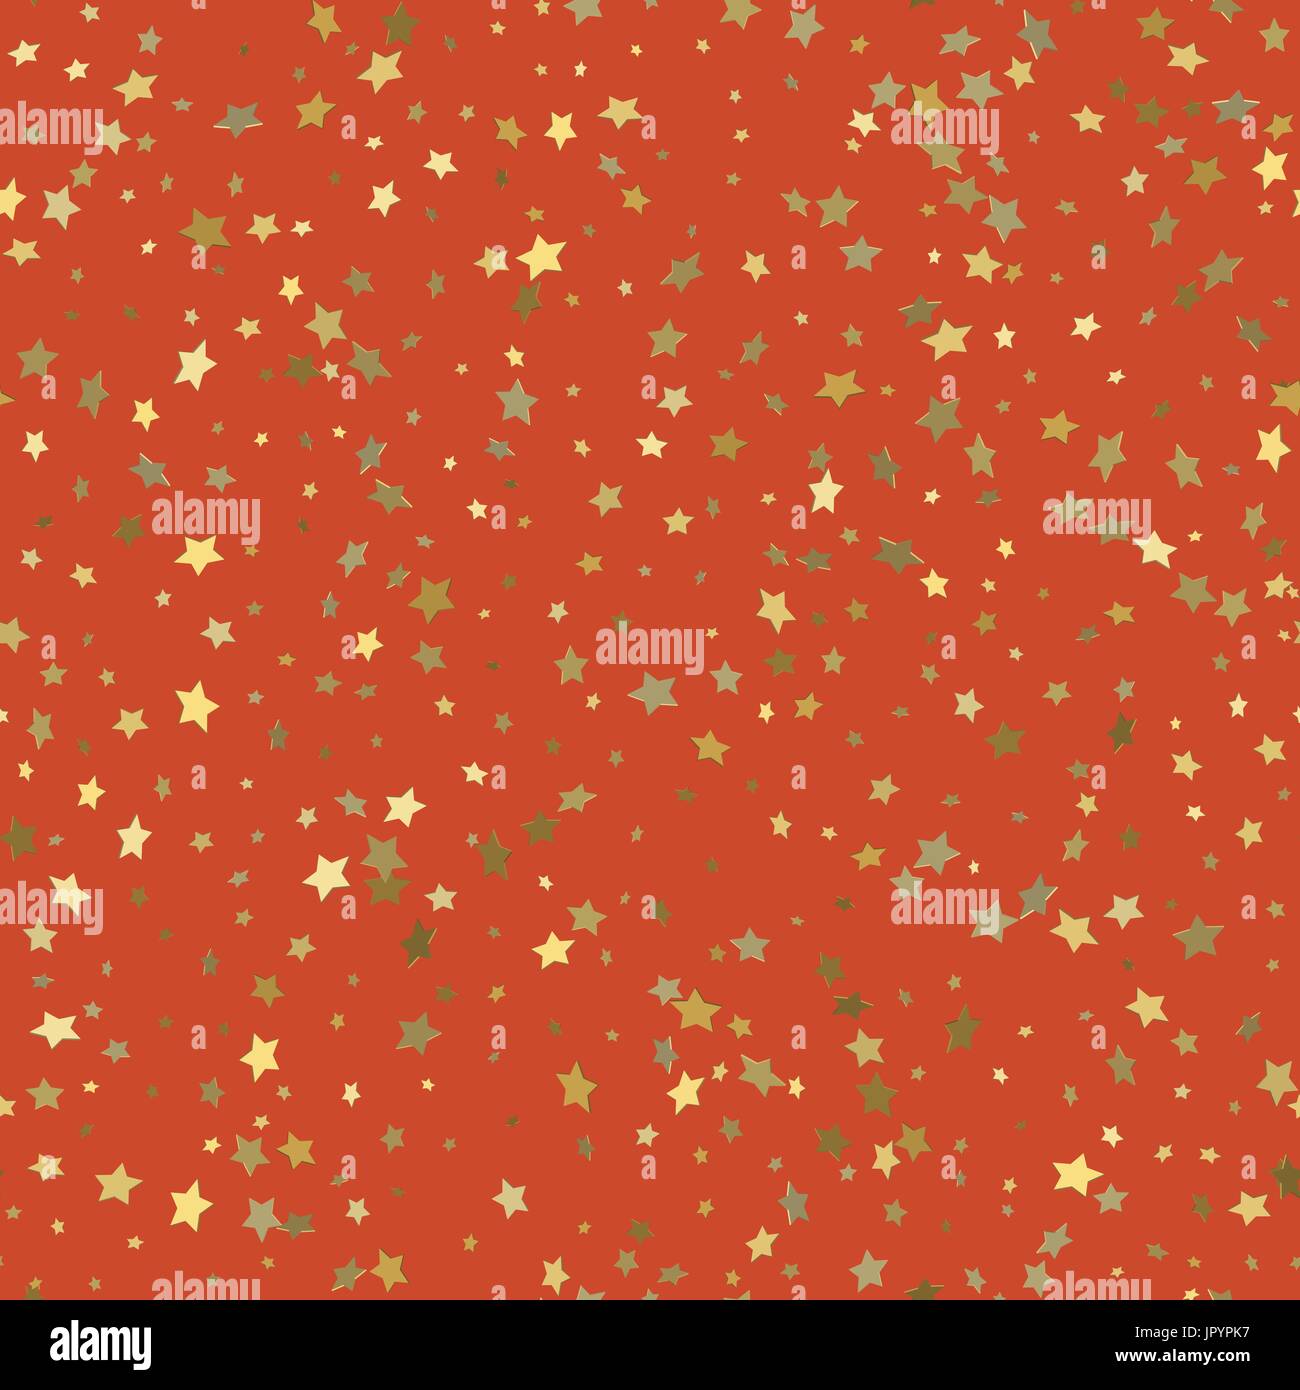 Golden stars pattern seamless. 3d stars on red background. Vector illustration Stock Vector